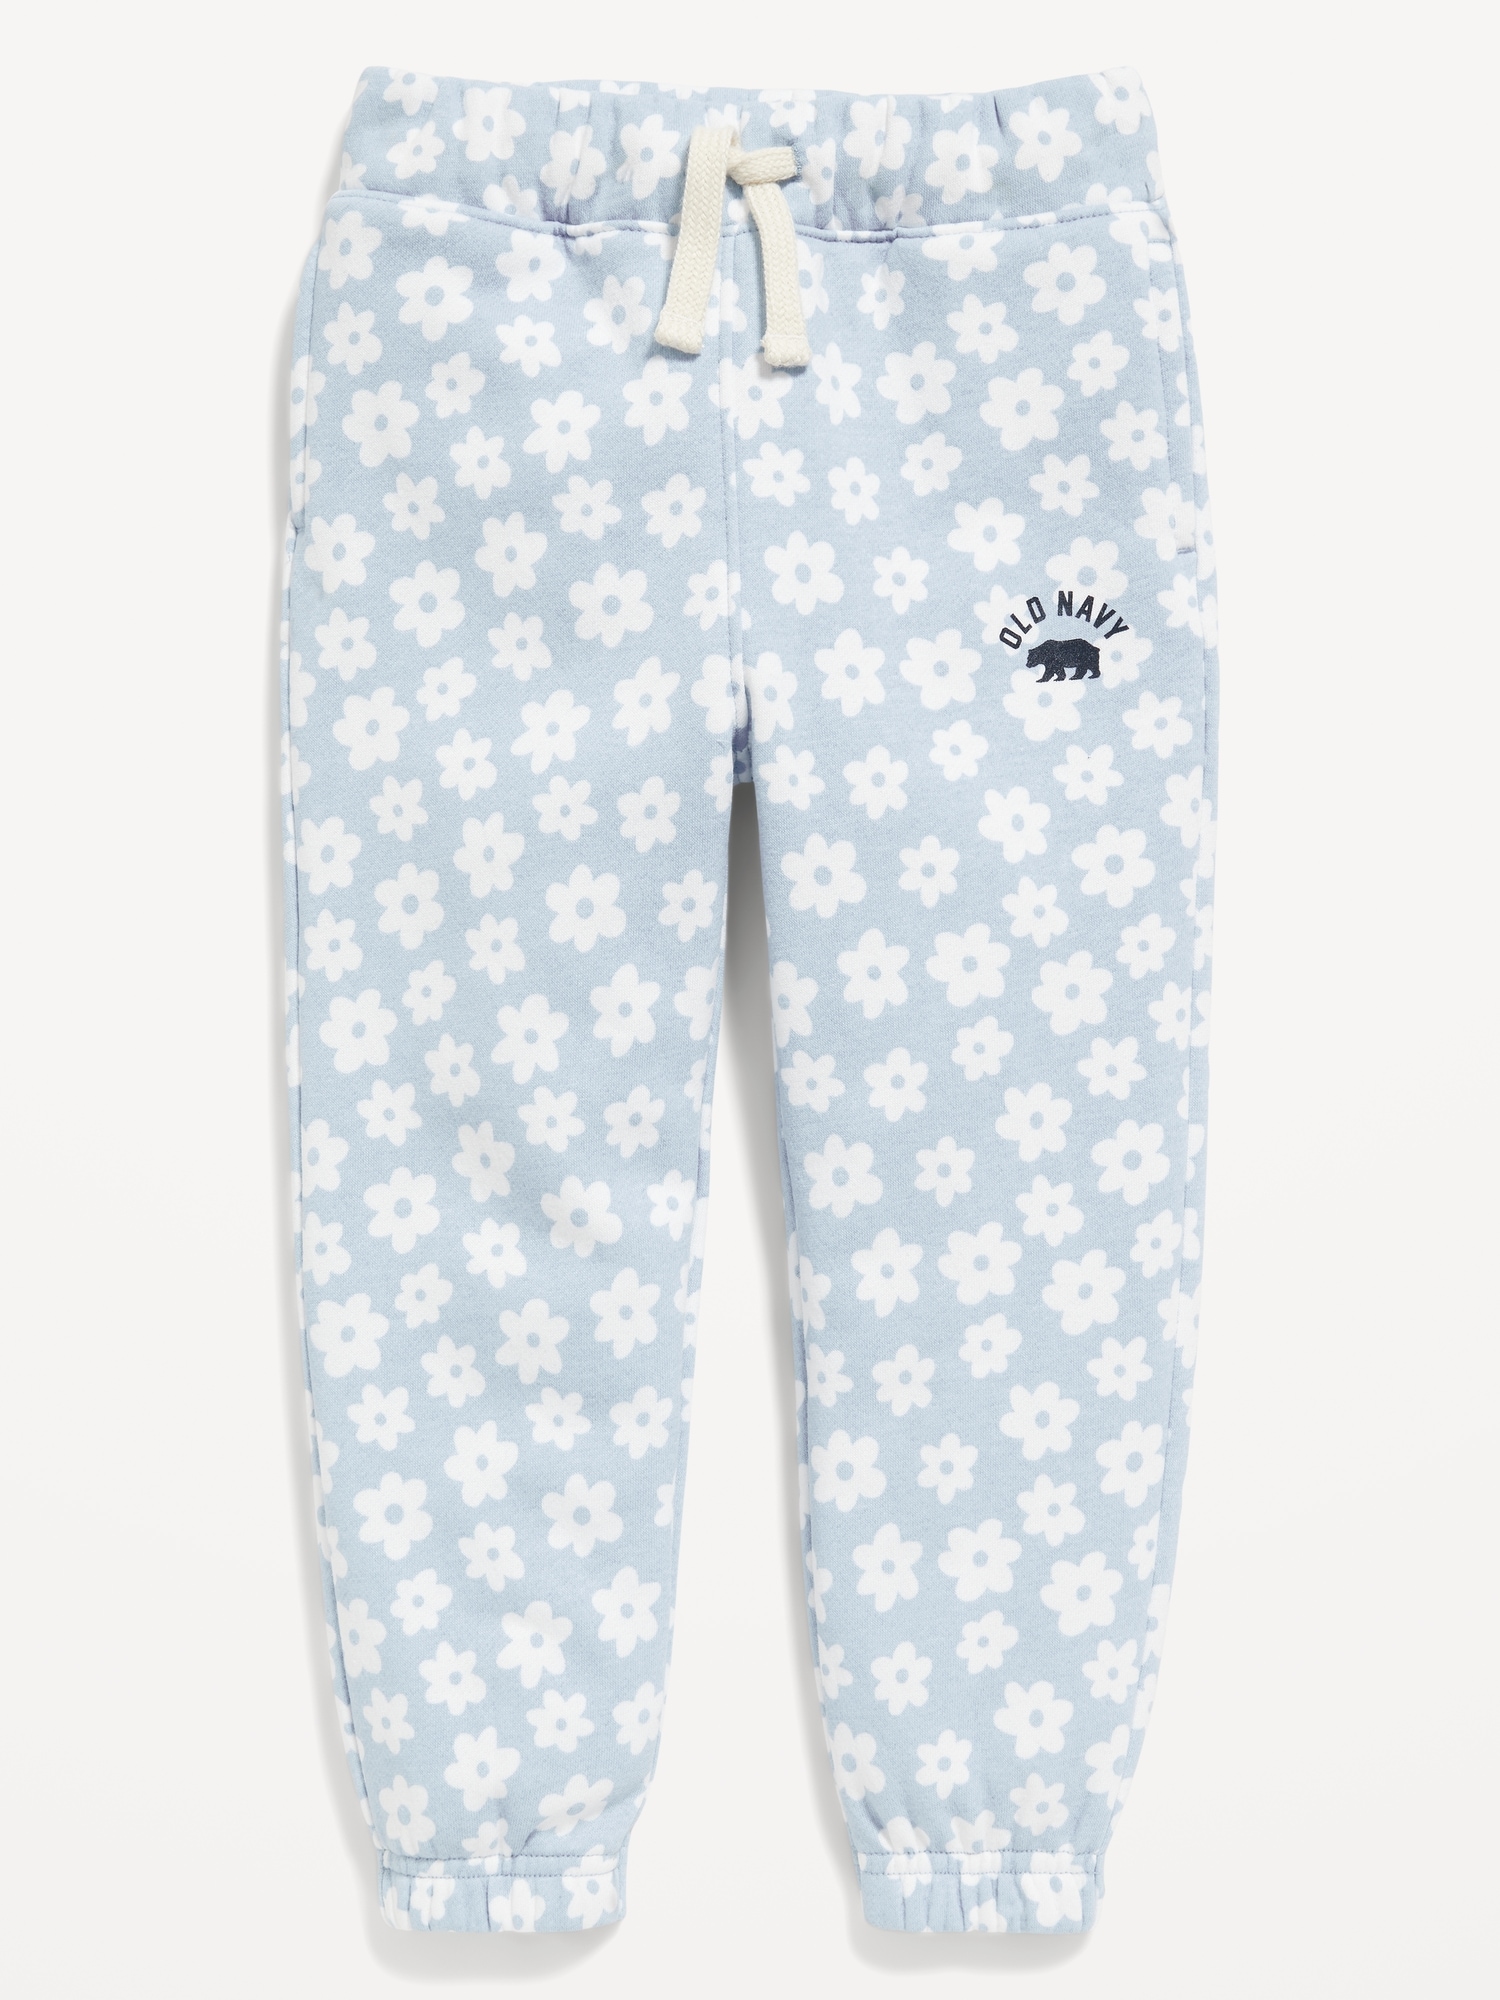 Old Navy Gender-Neutral Fleece Cinched Graphic Jogger Sweatpants for Kids